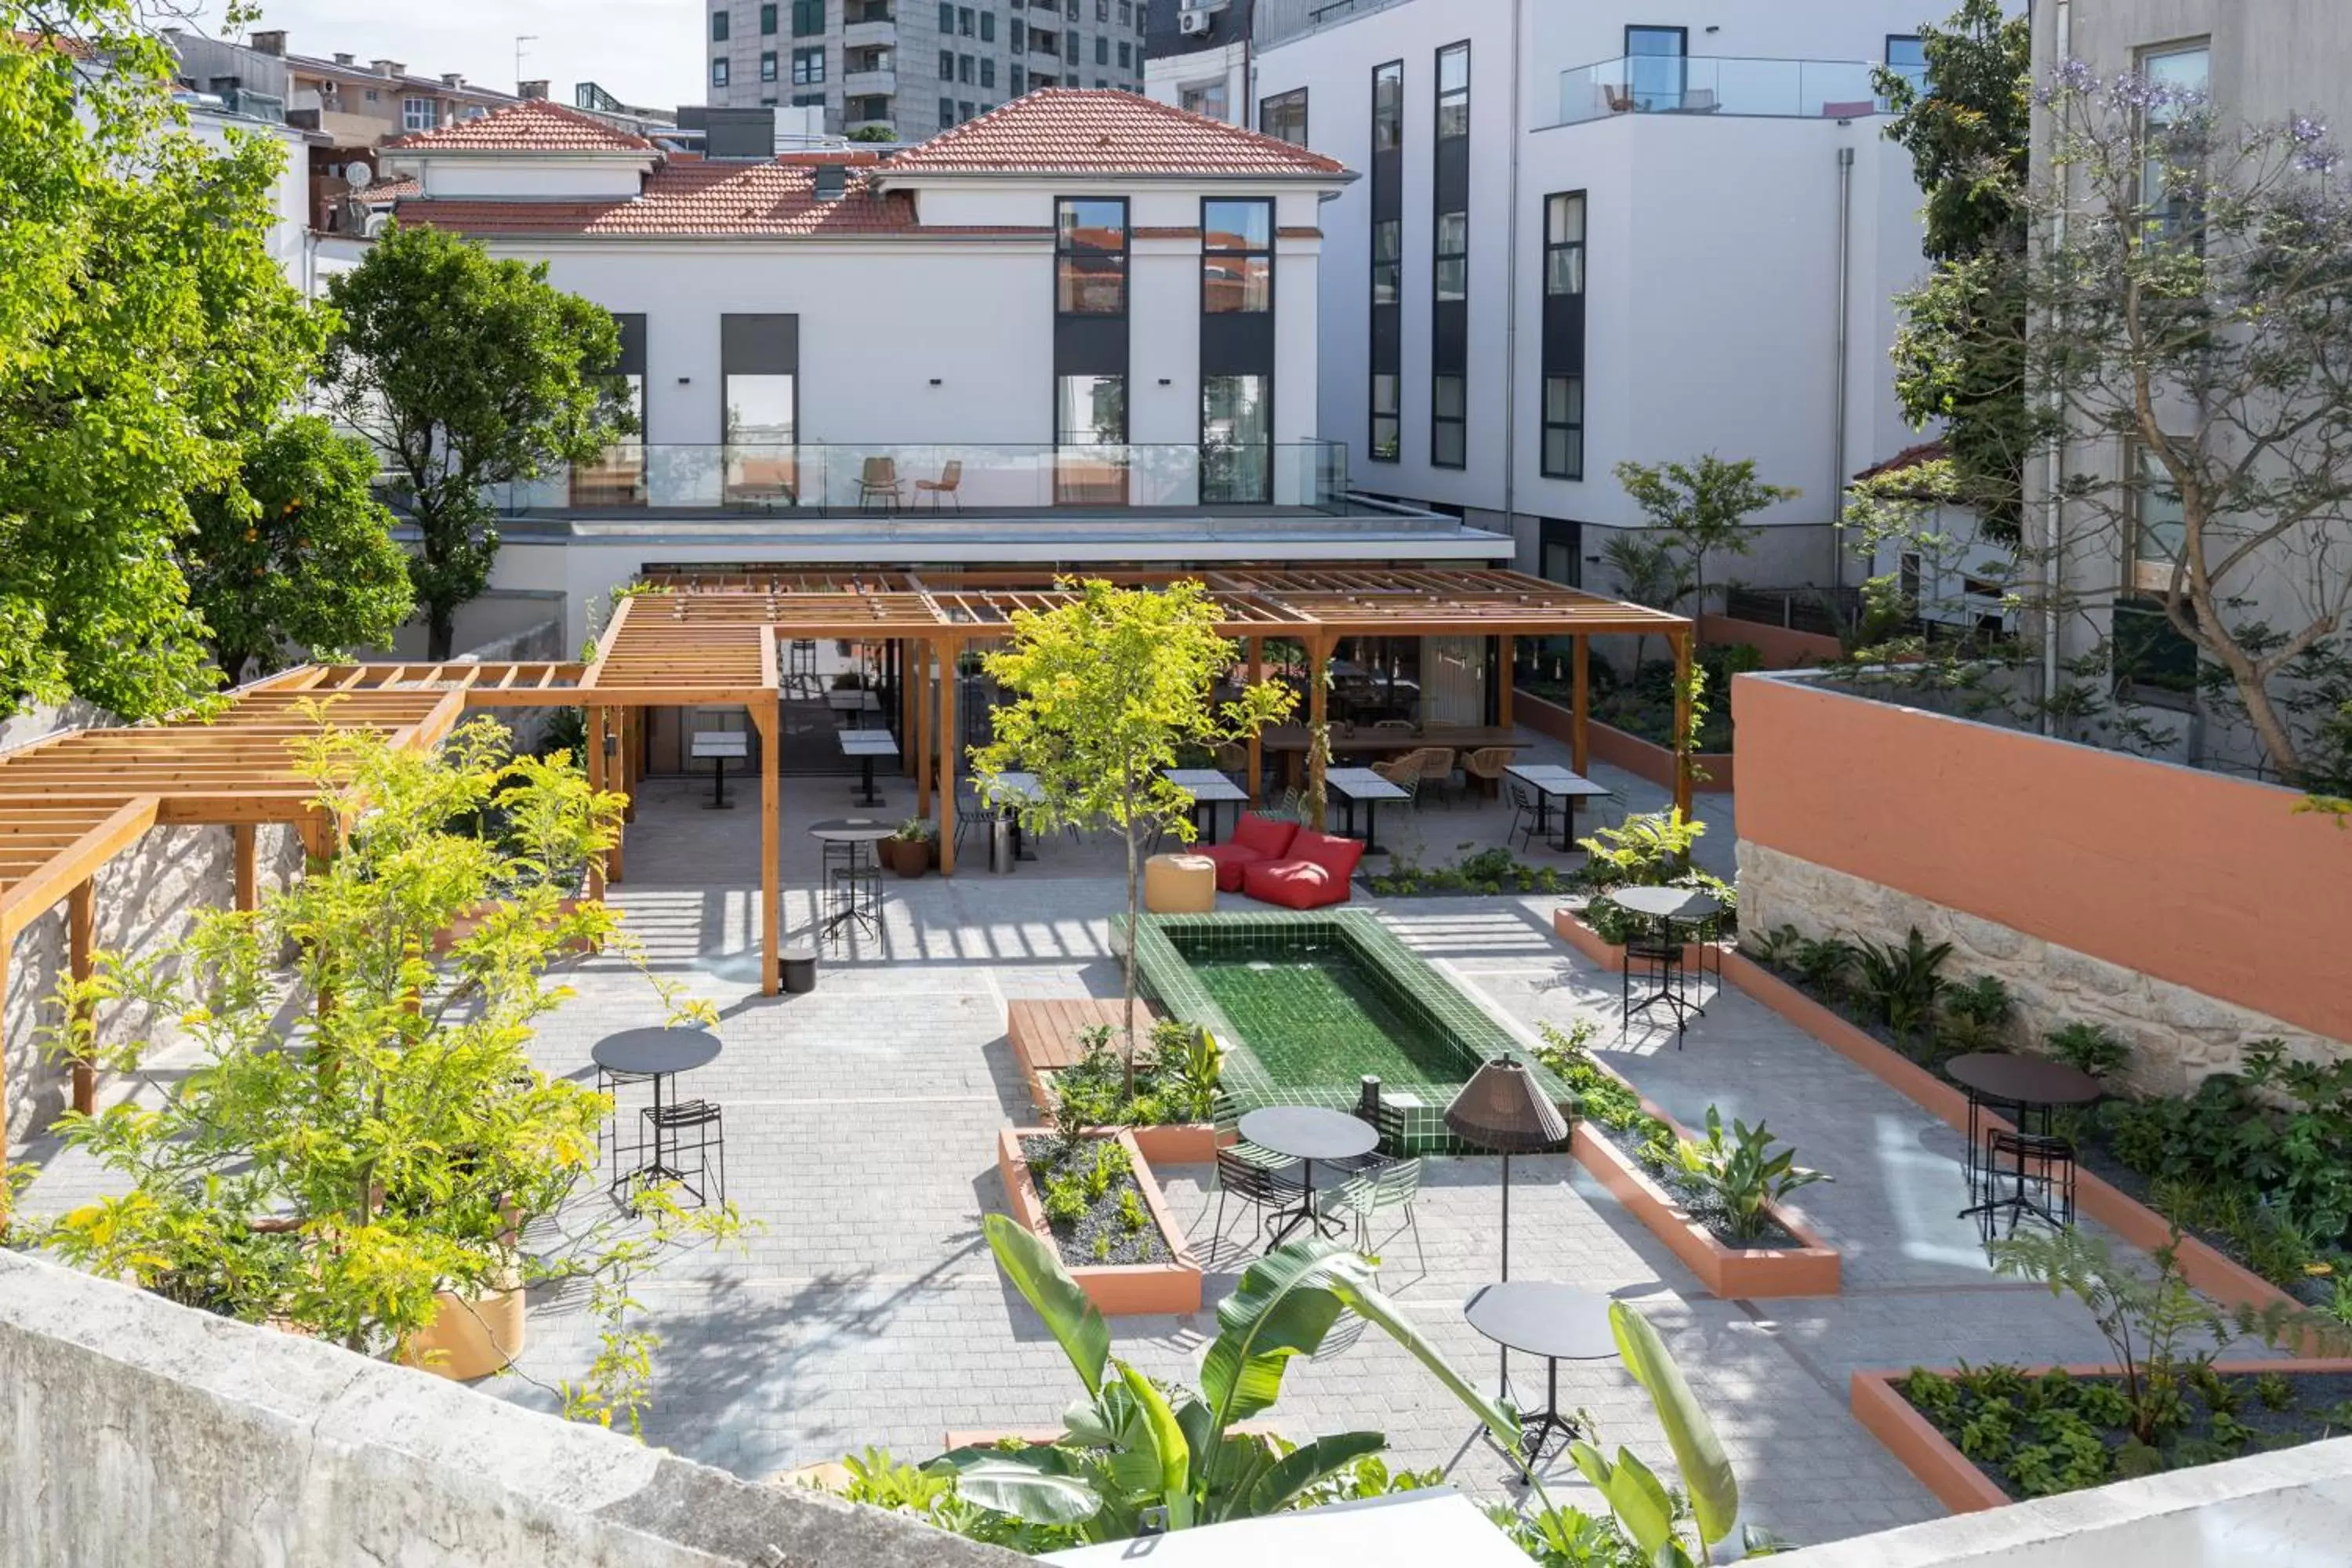 Off site, Pool View in The Editory Garden Porto Hotel